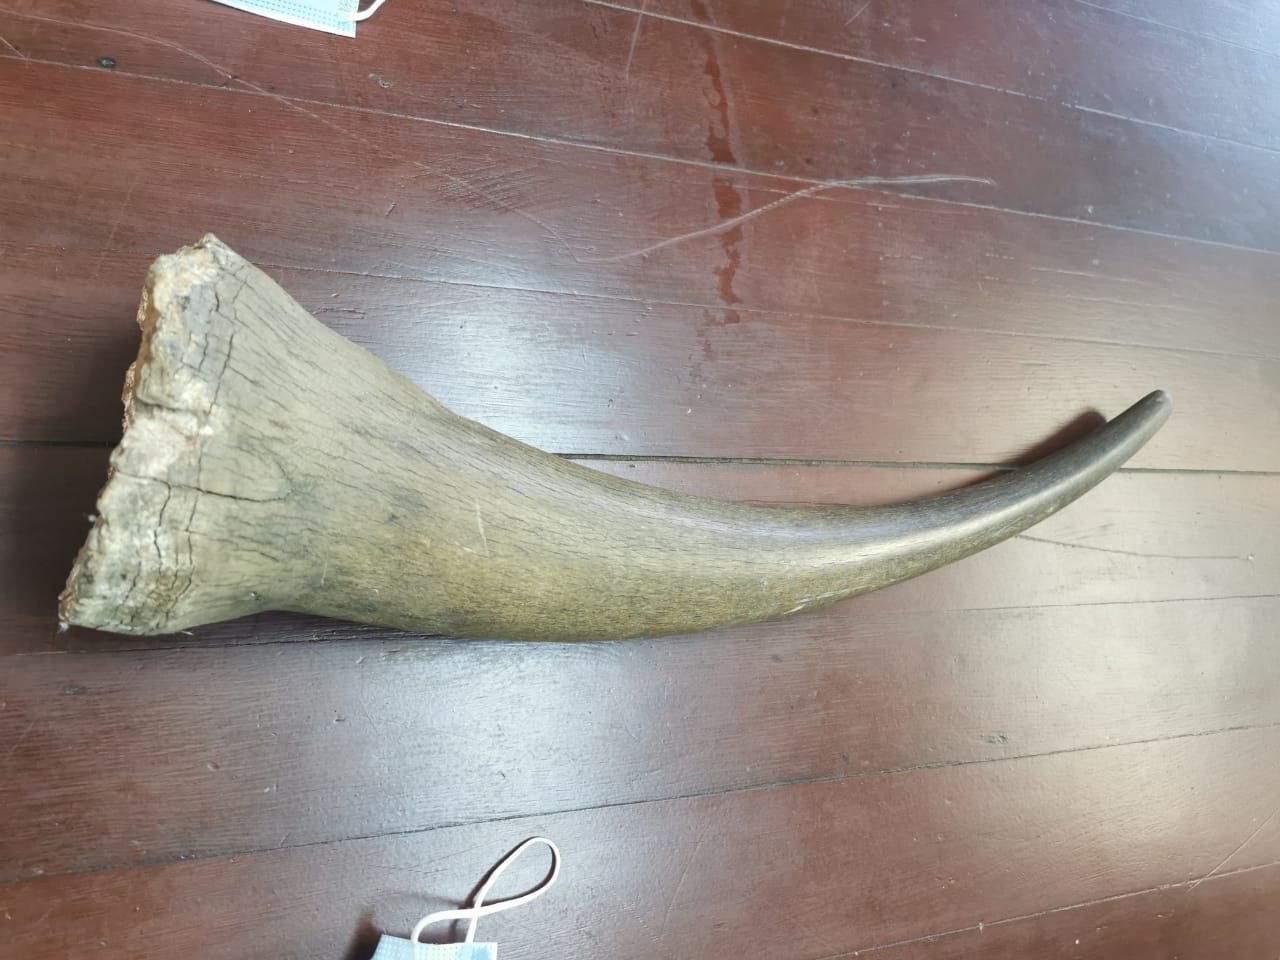 Rhino horn confiscated in Port Elizabeth